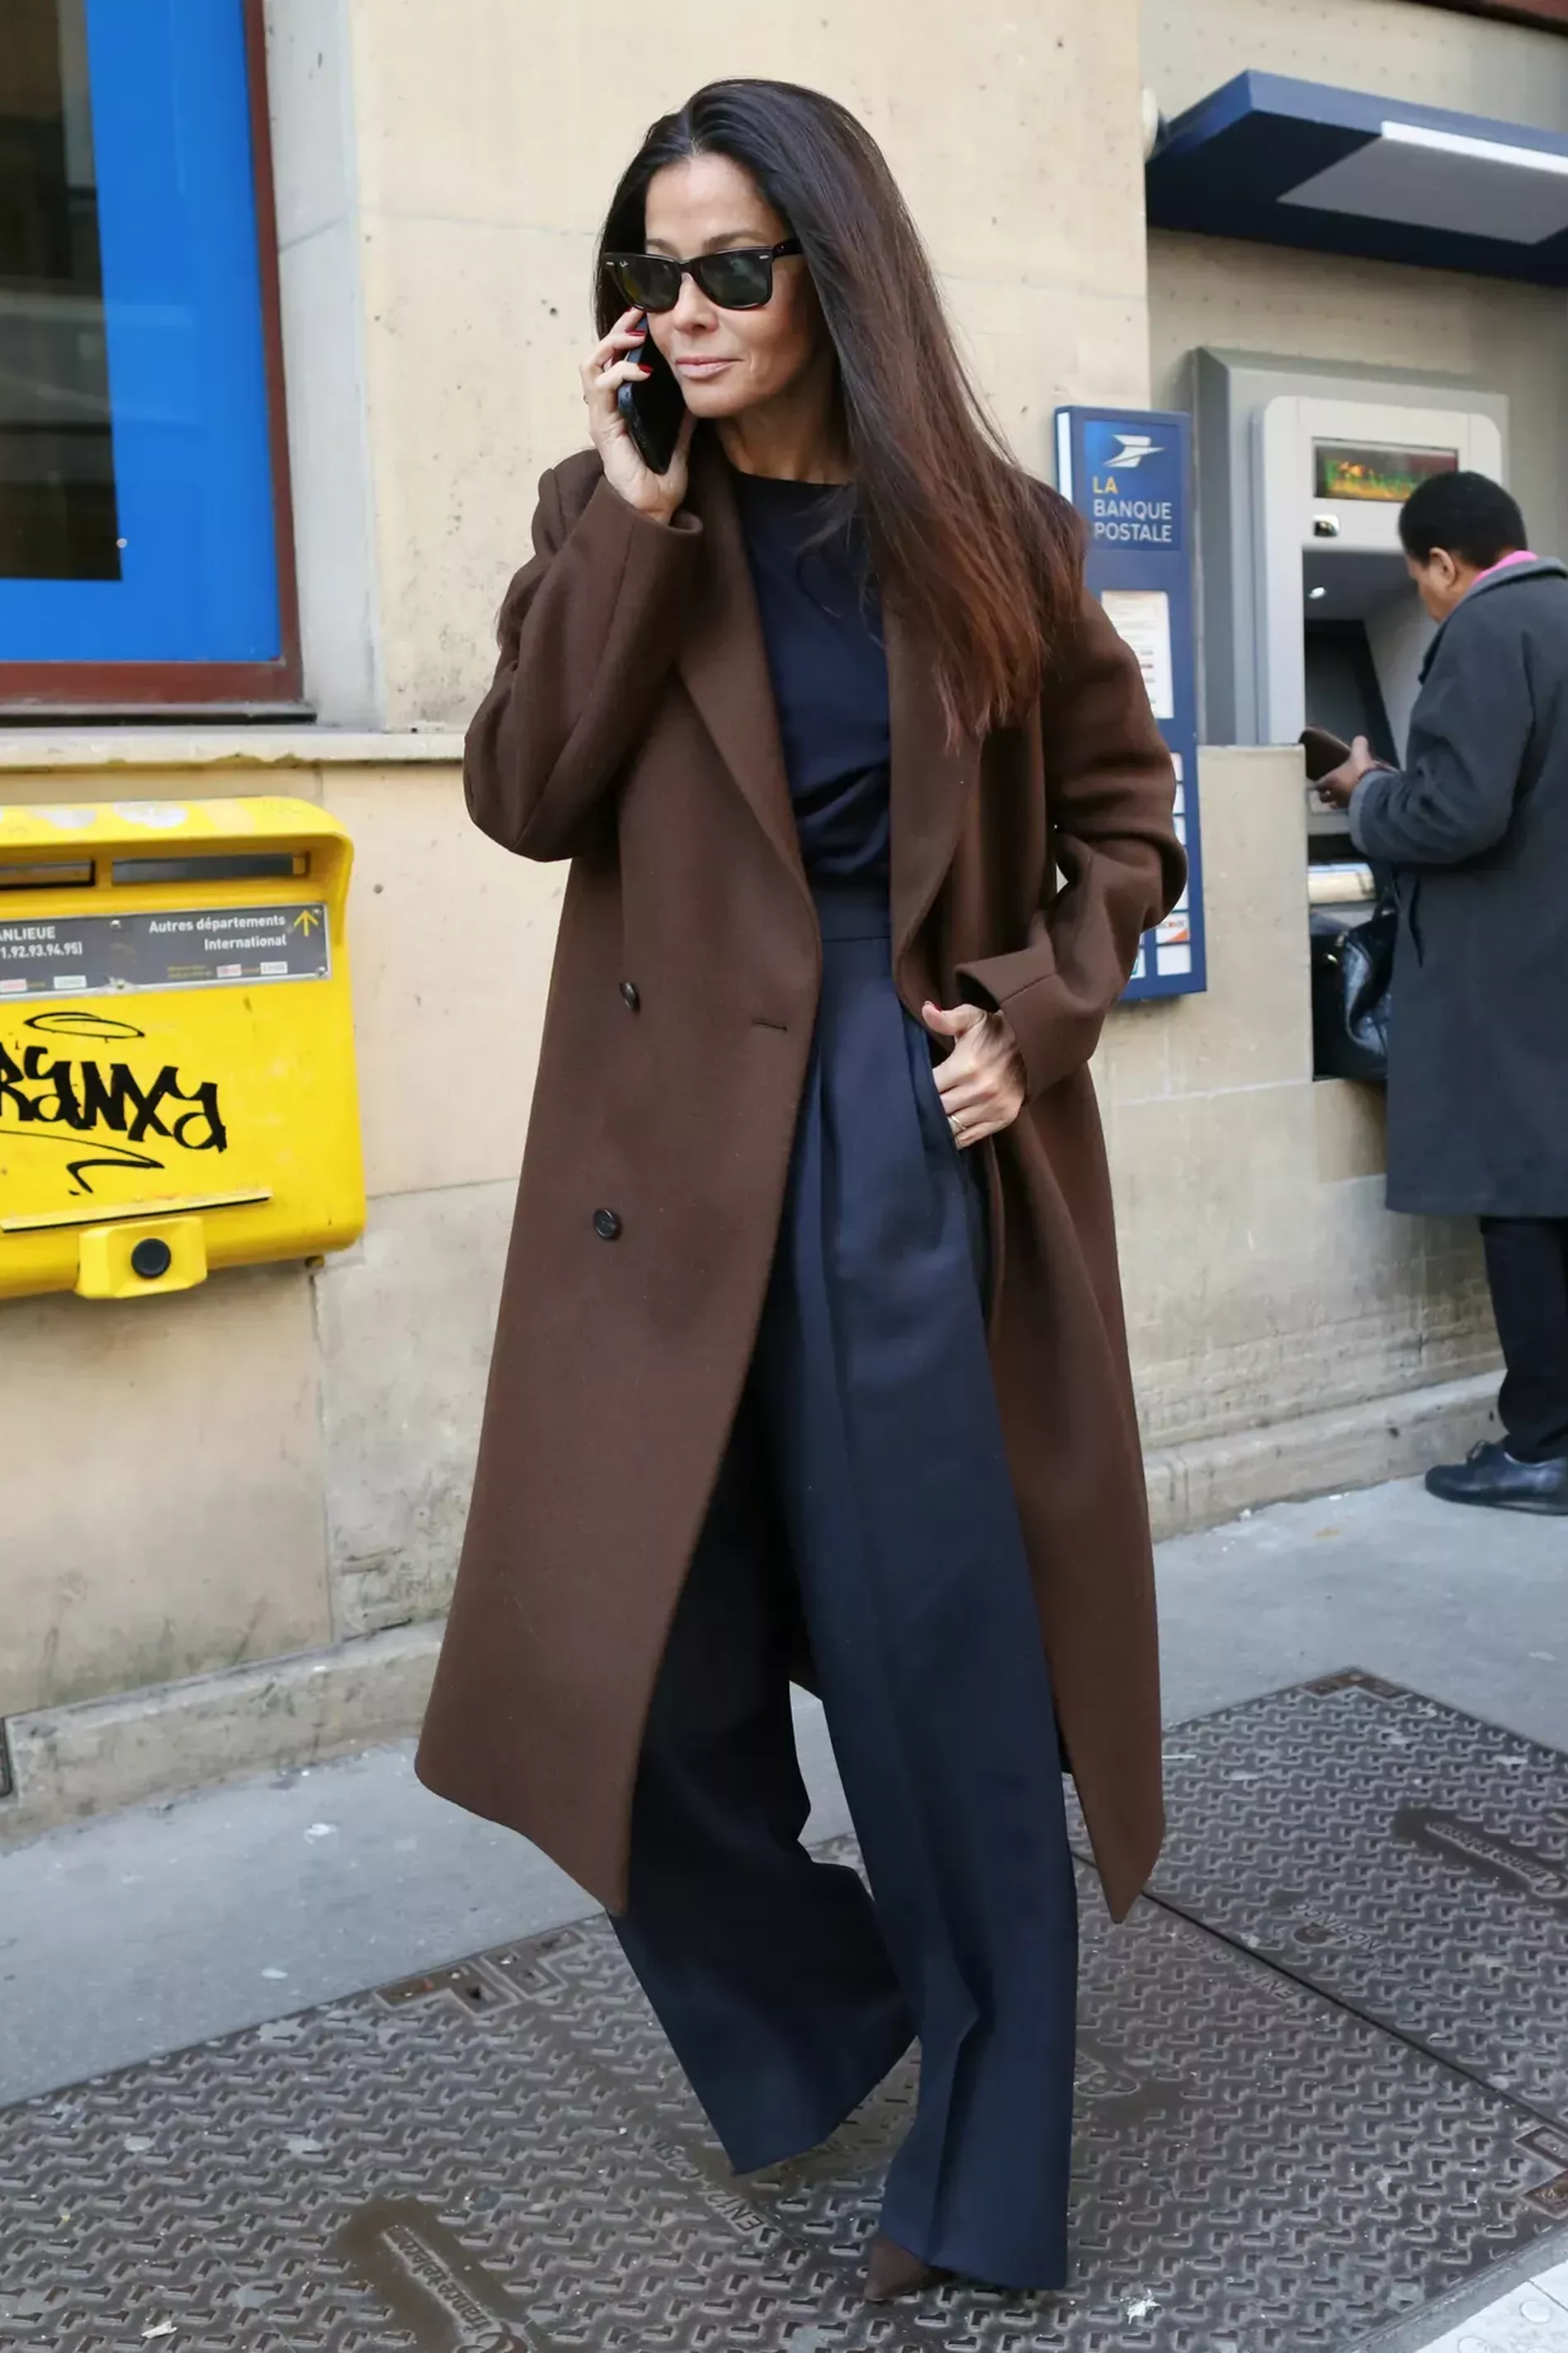 Paris Fashion Week guest wears brown coat over black top and pants 